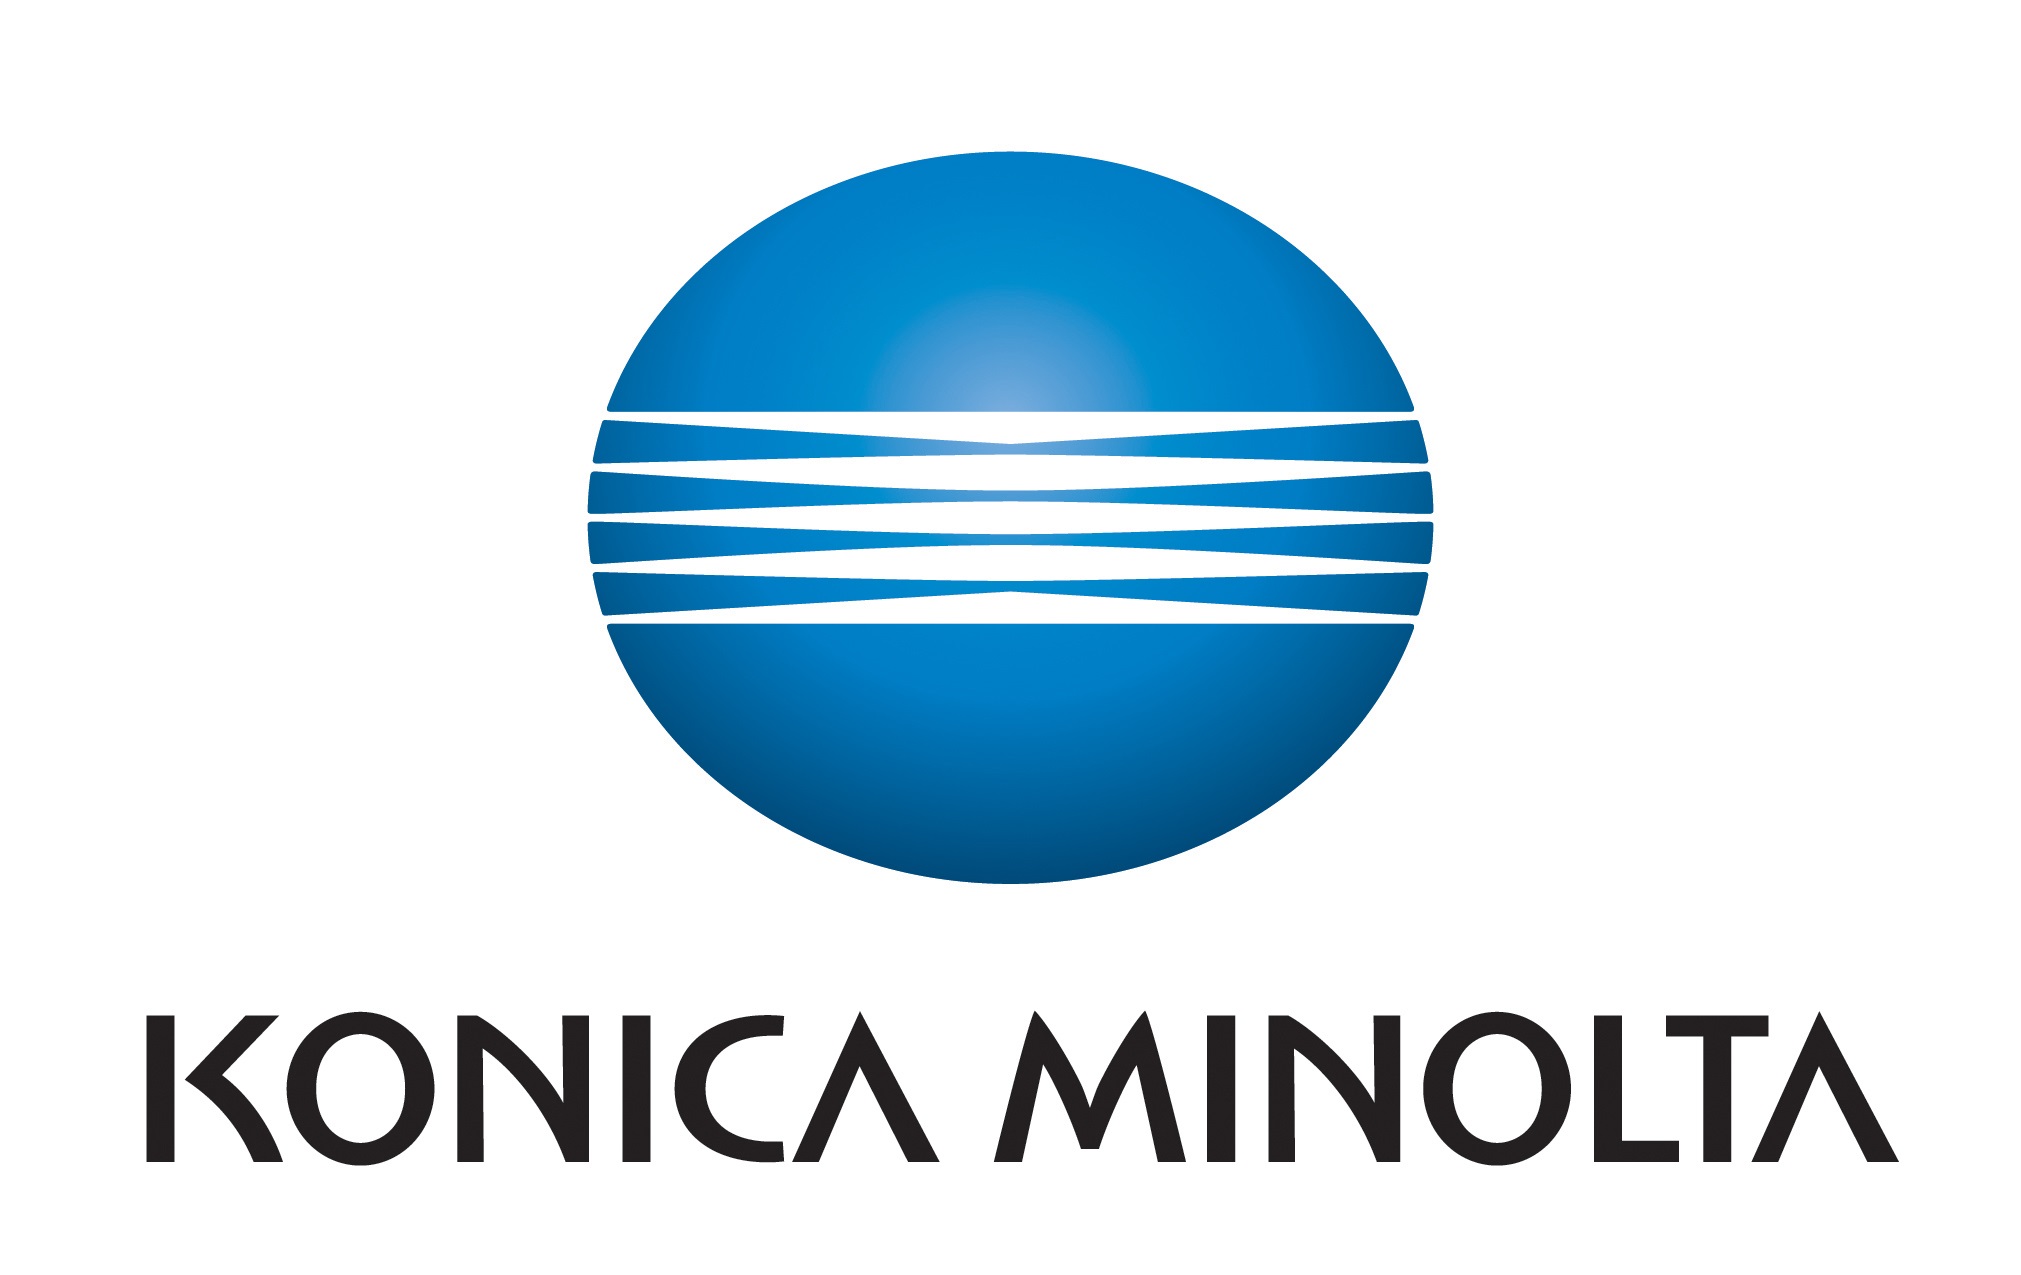 Konica Minolta and F